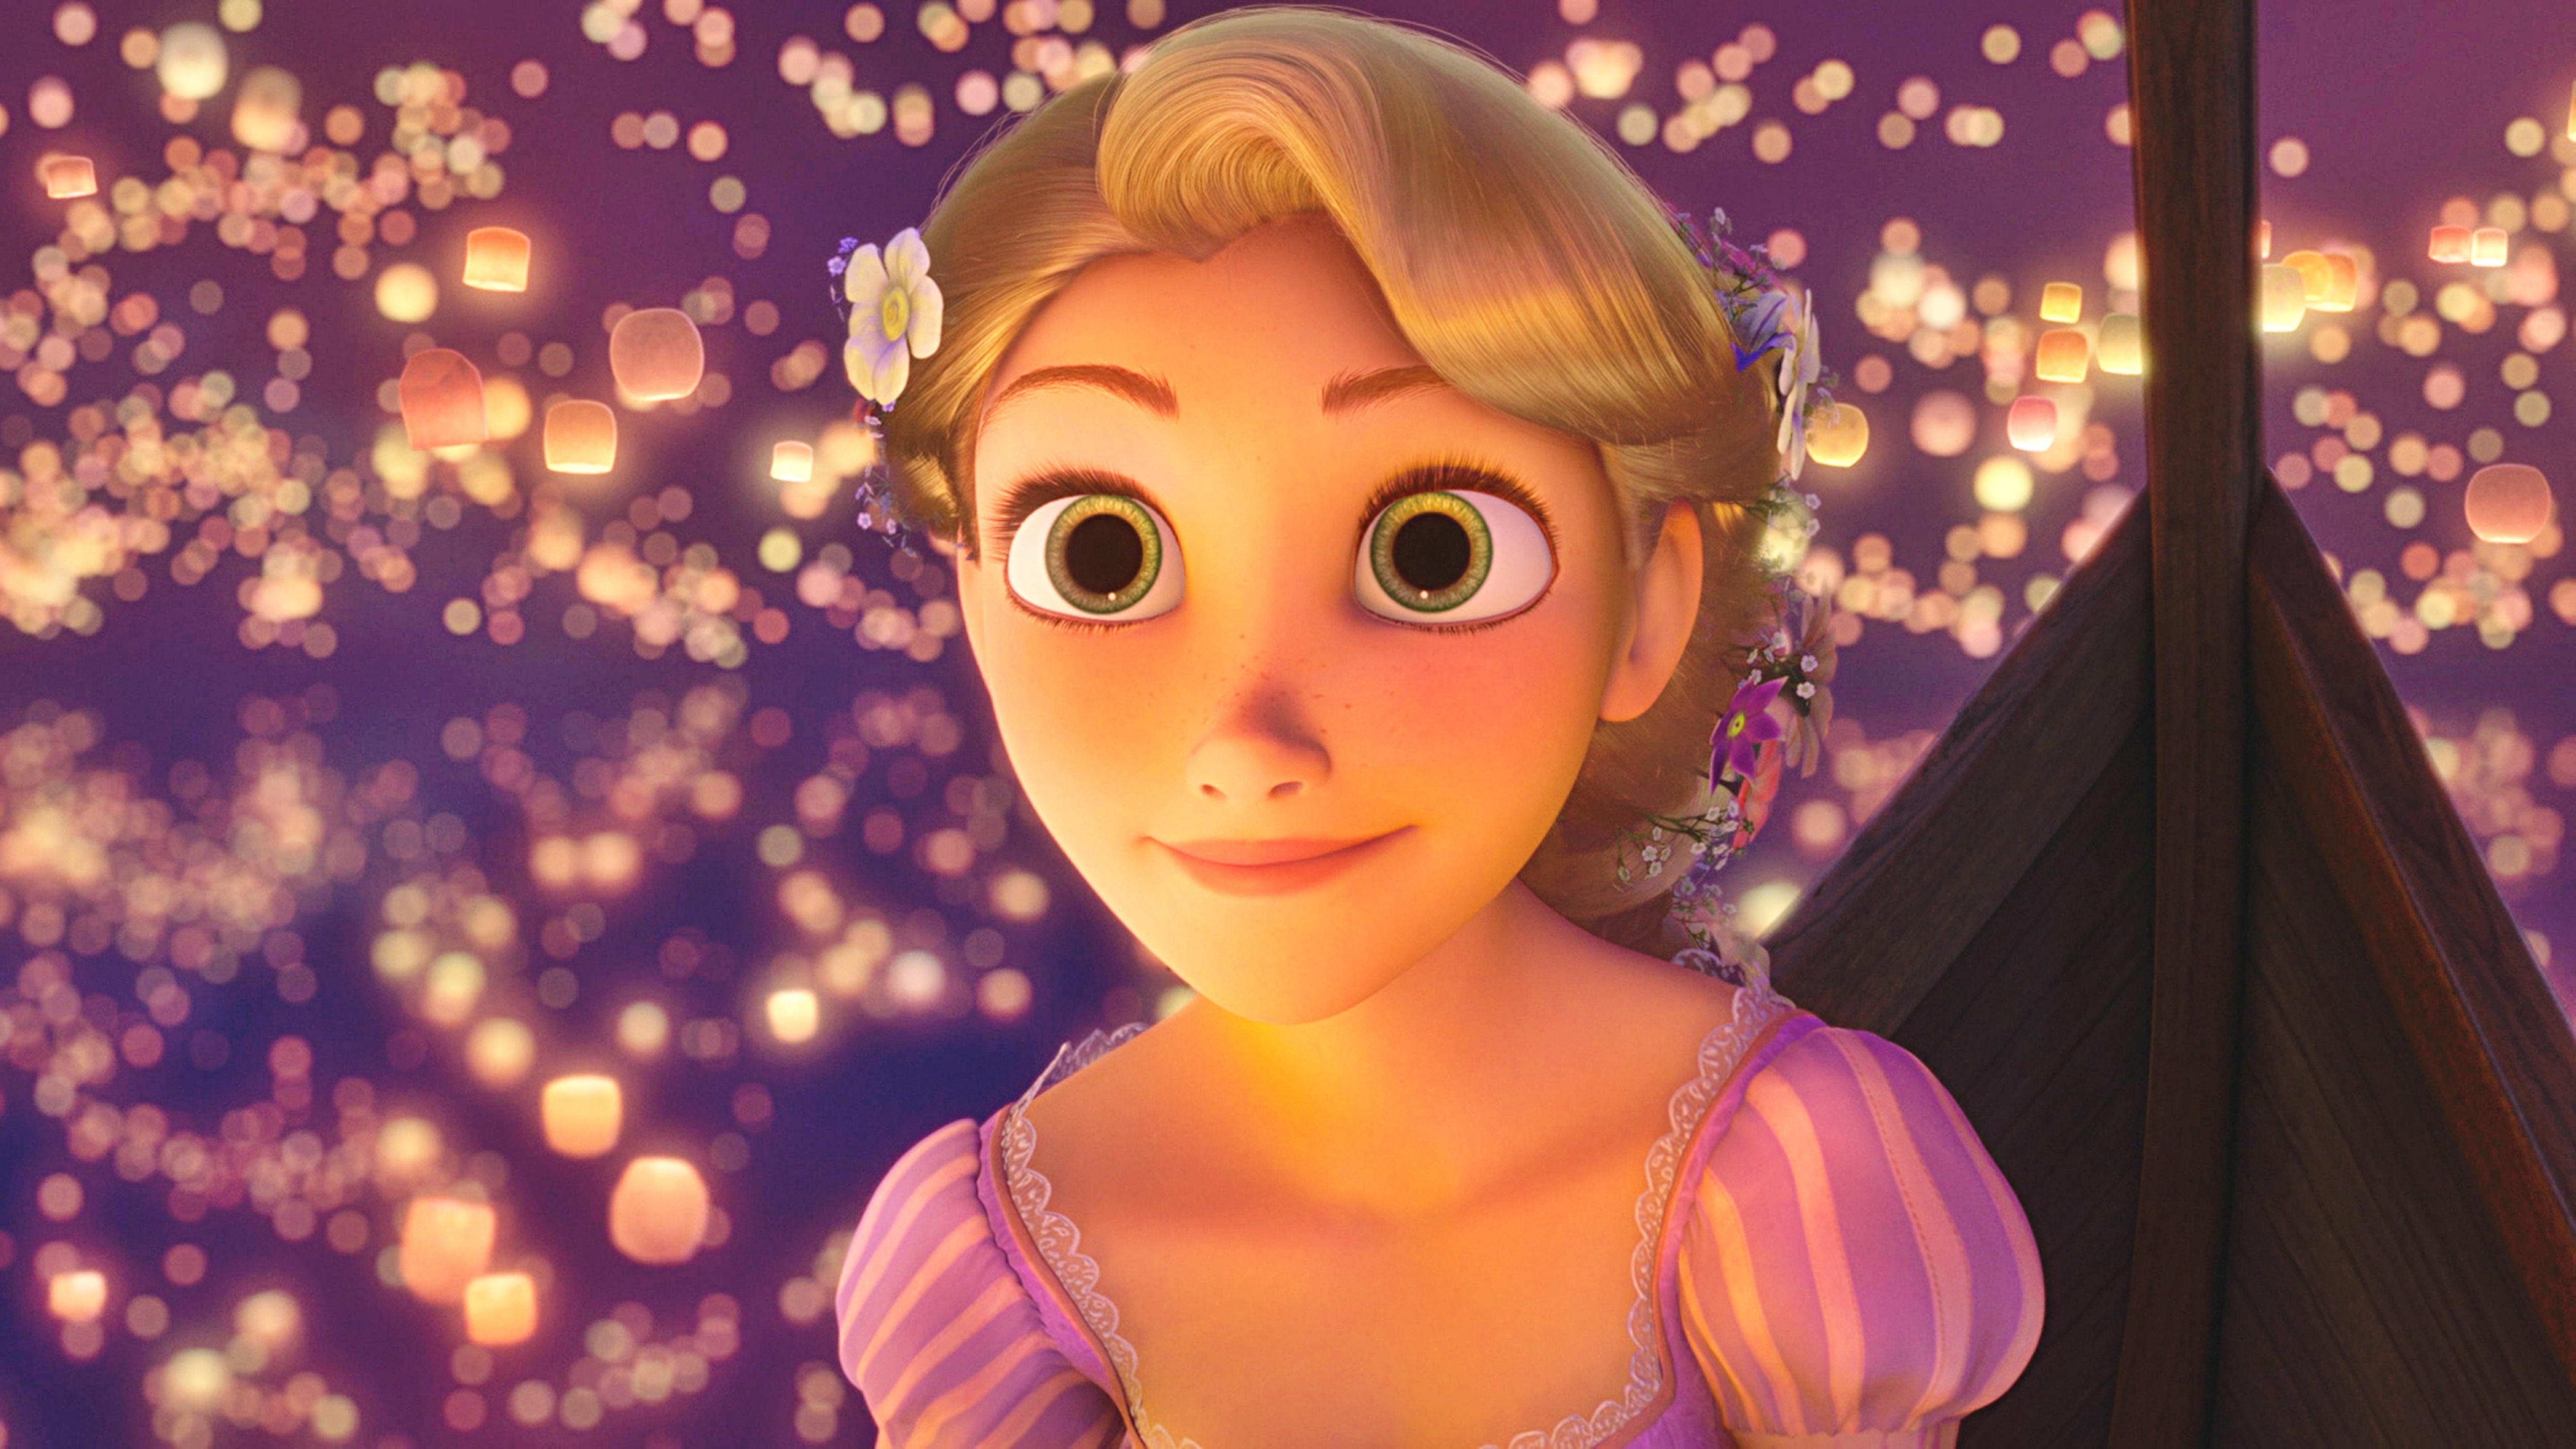 Do you like Rapunzel's eyes? Poll Results - Disney ...